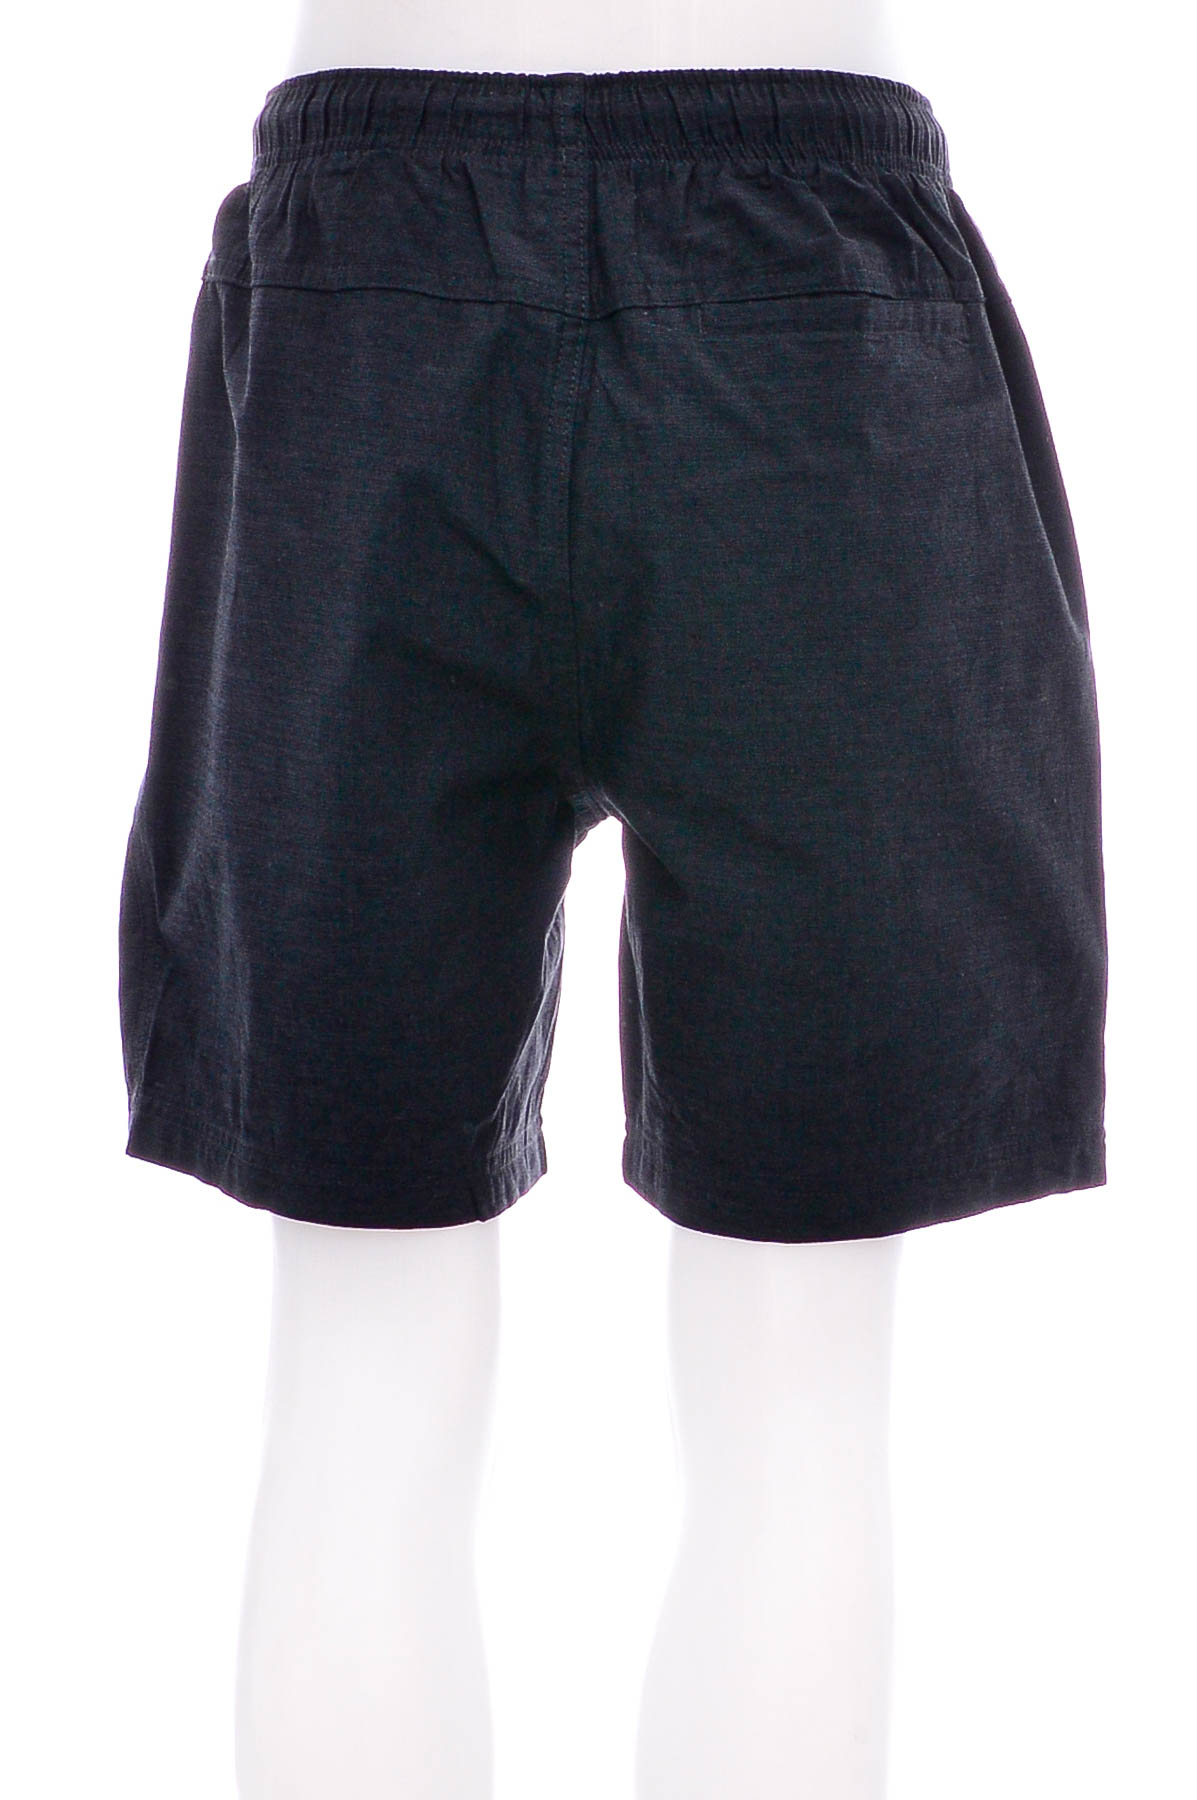 Men's shorts - Kmart - 1